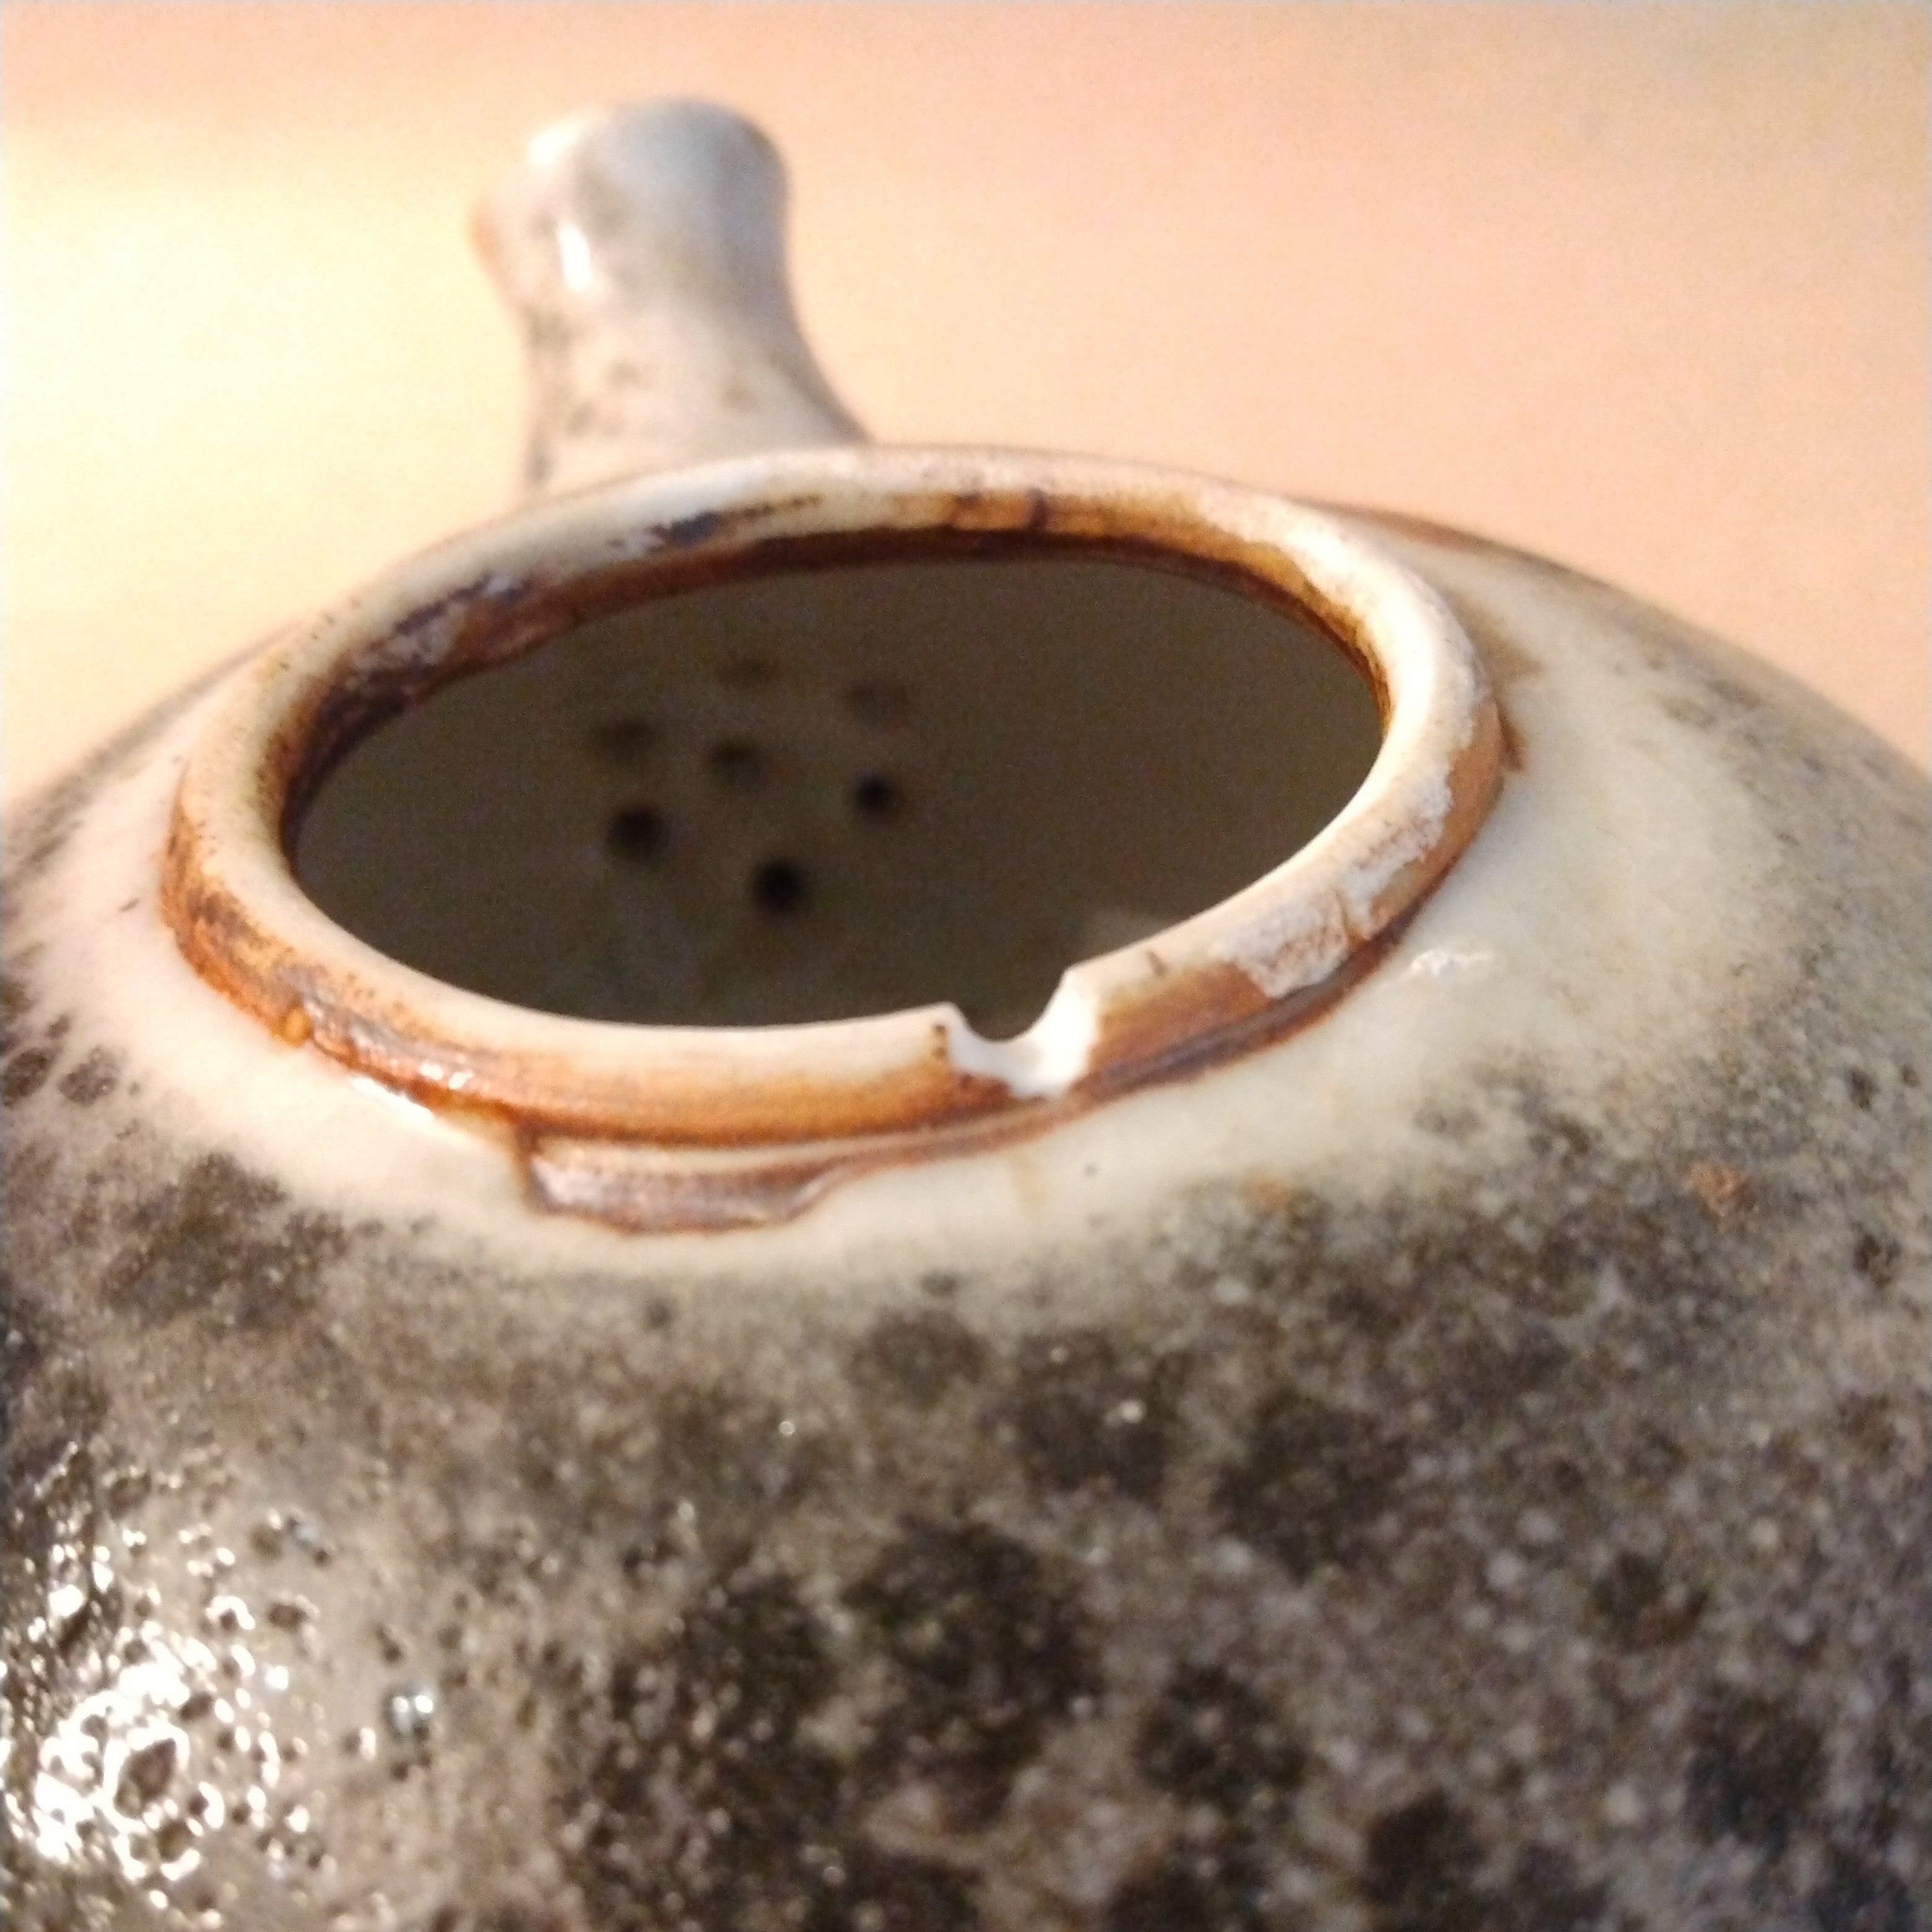 Porcelain Tea Pot, by George Gledhill